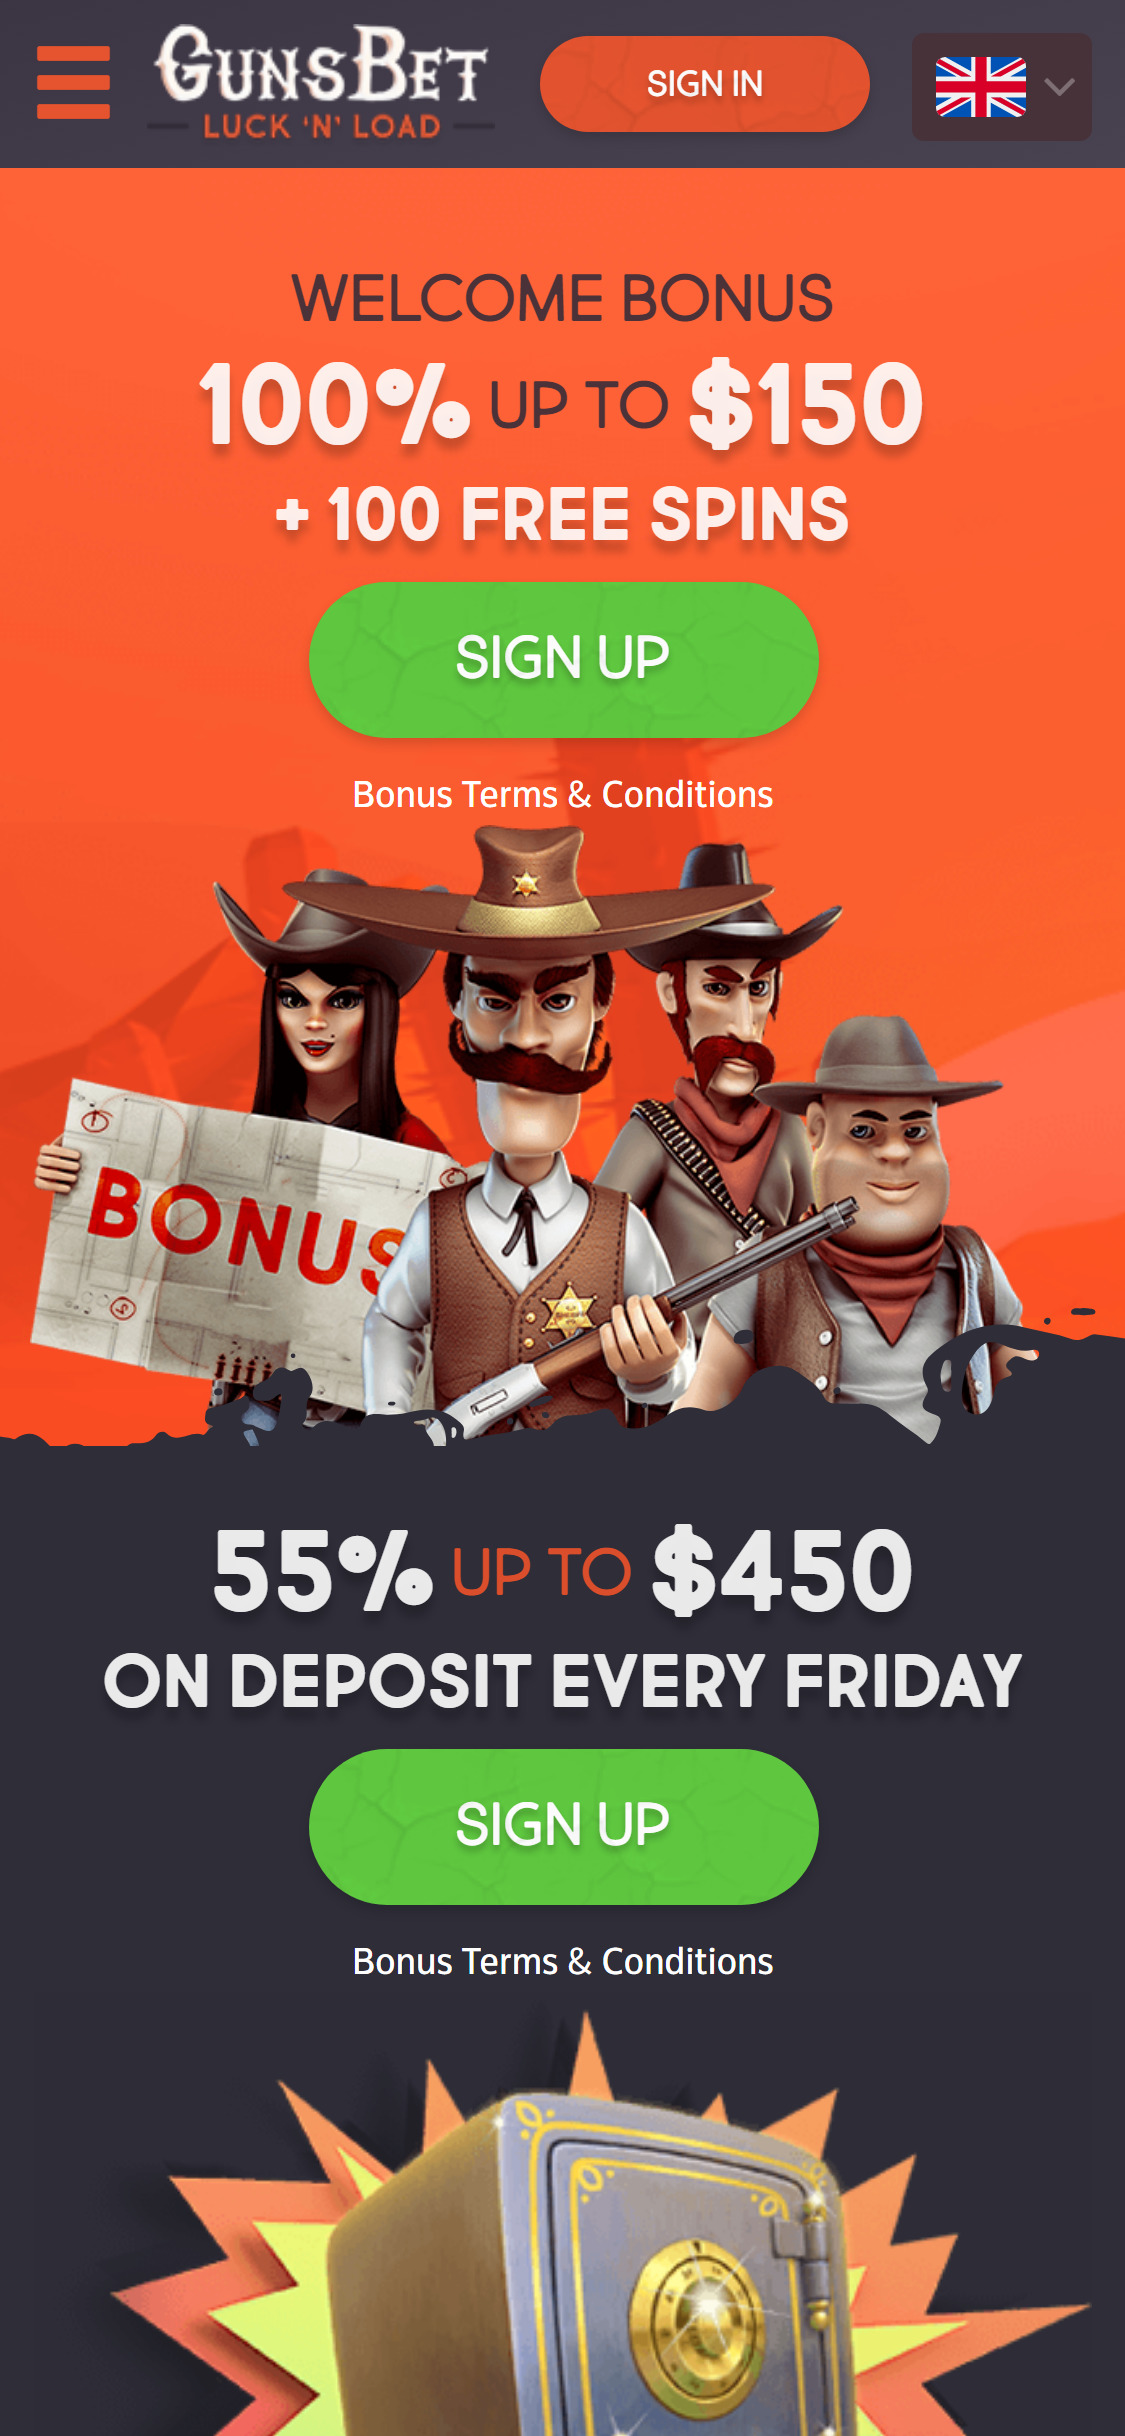 Guns Bet Casino Mobile No Deposit Bonus Review